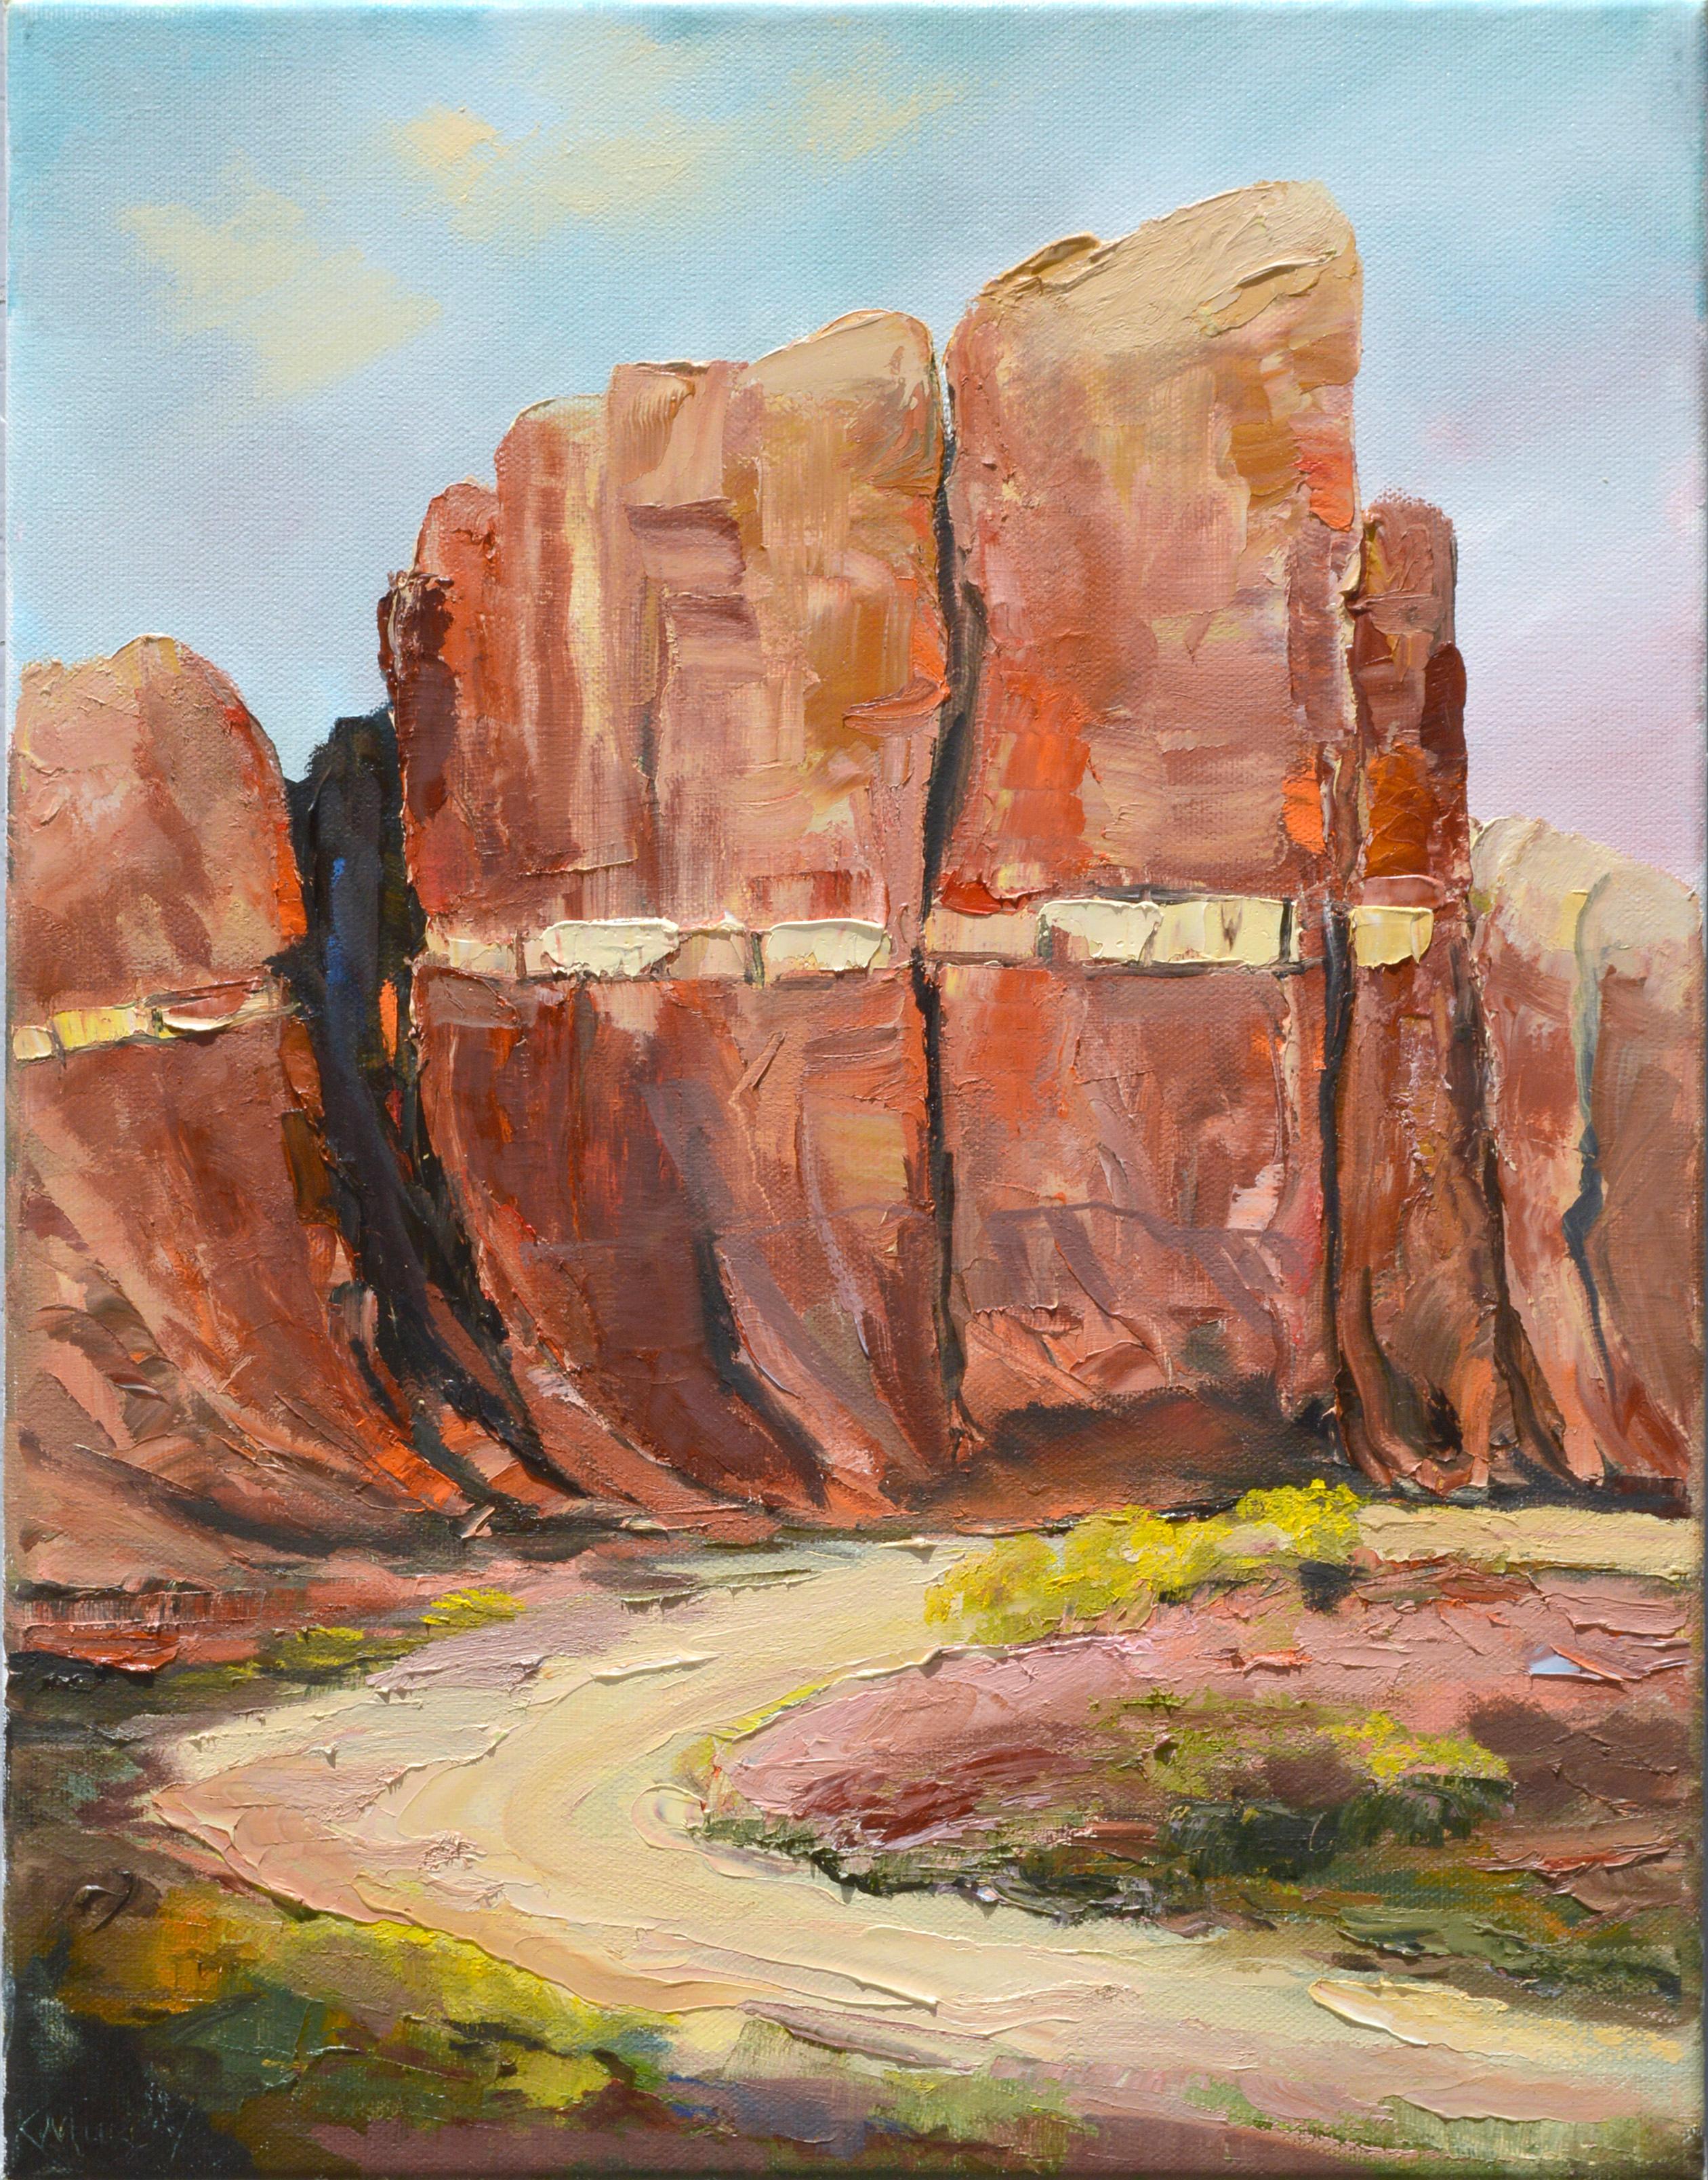 Kathleen Murray Landscape Painting - Road Near the Mesa, Contemporary Desert Red Rocks Vertical Landscape